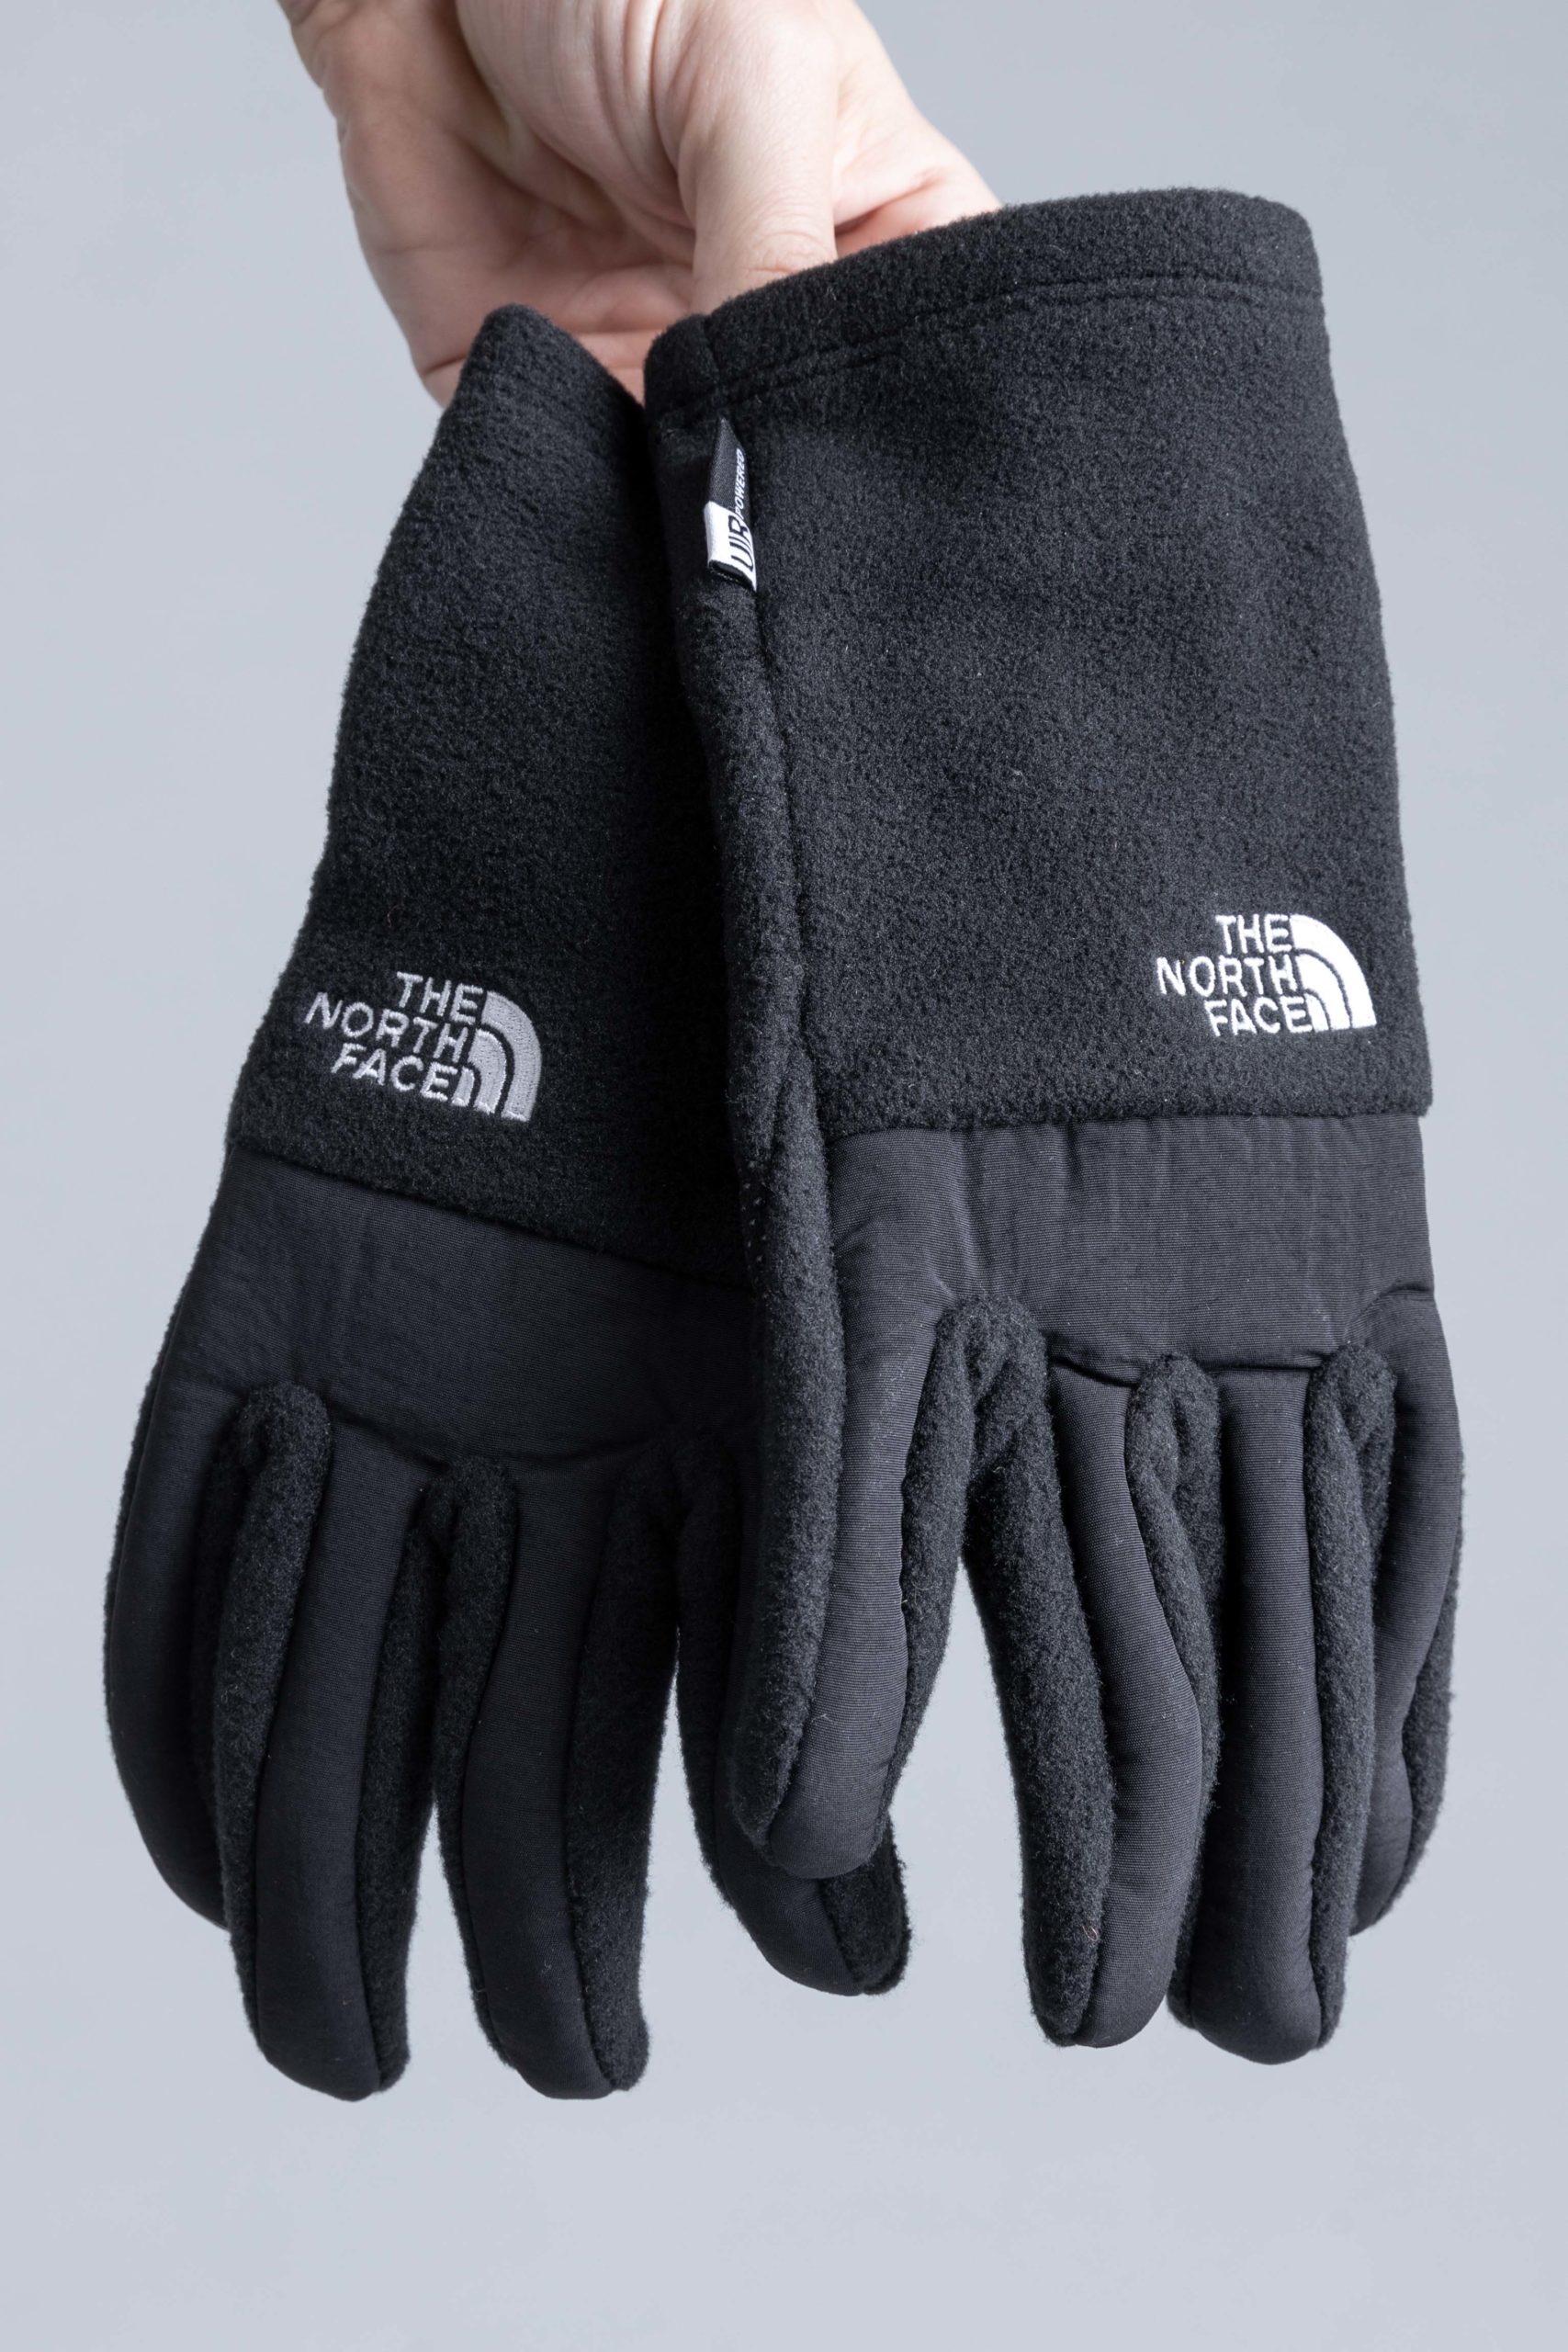 the north face unisex etip glove